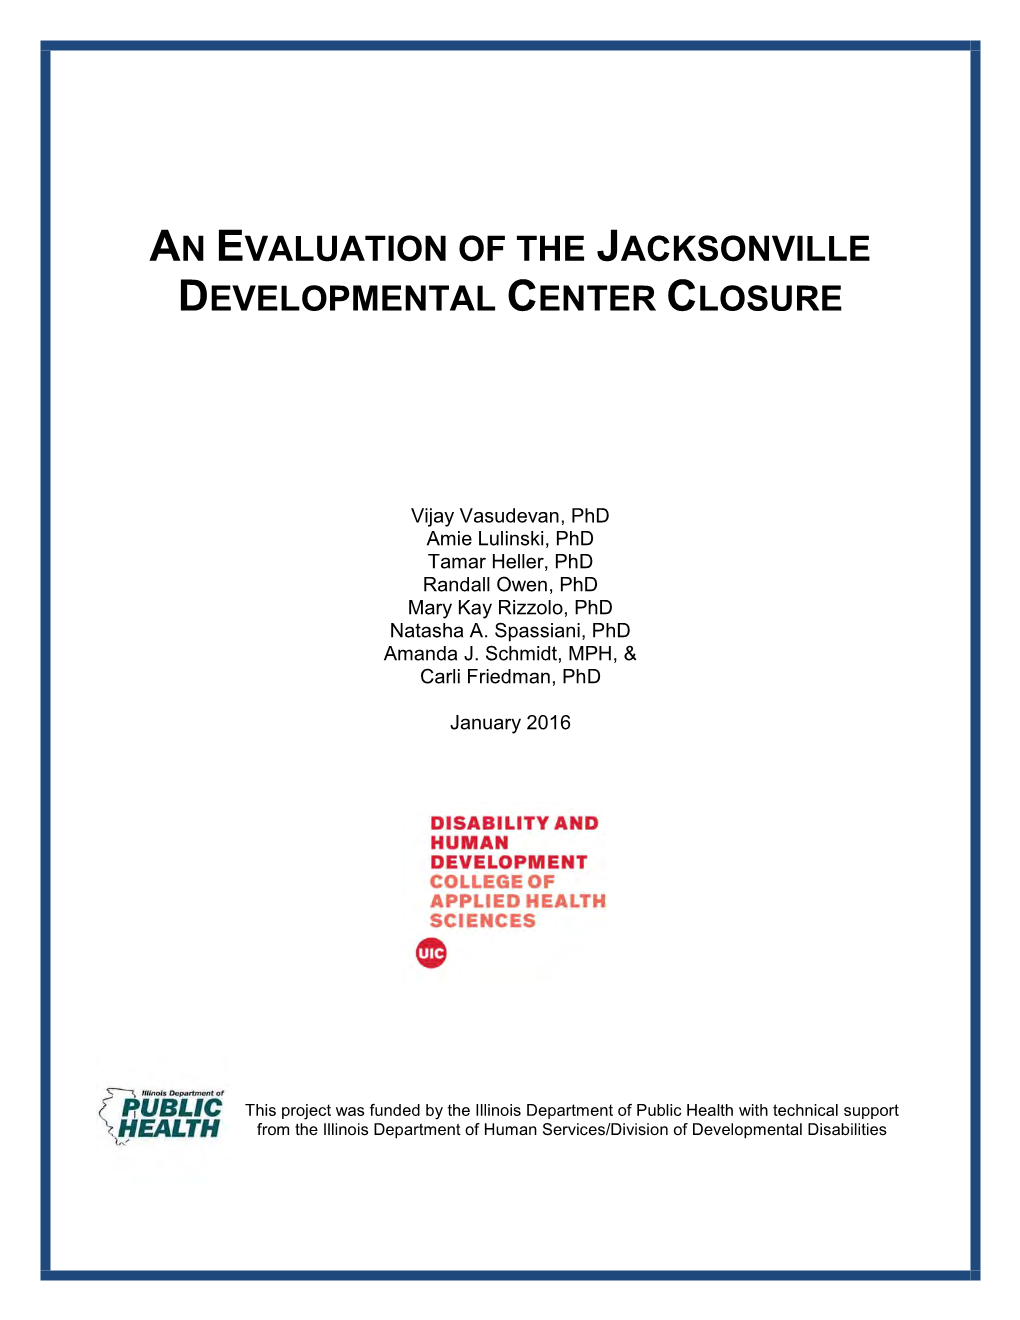 An Evaluation of the Jacksonville Developmental Center Closure